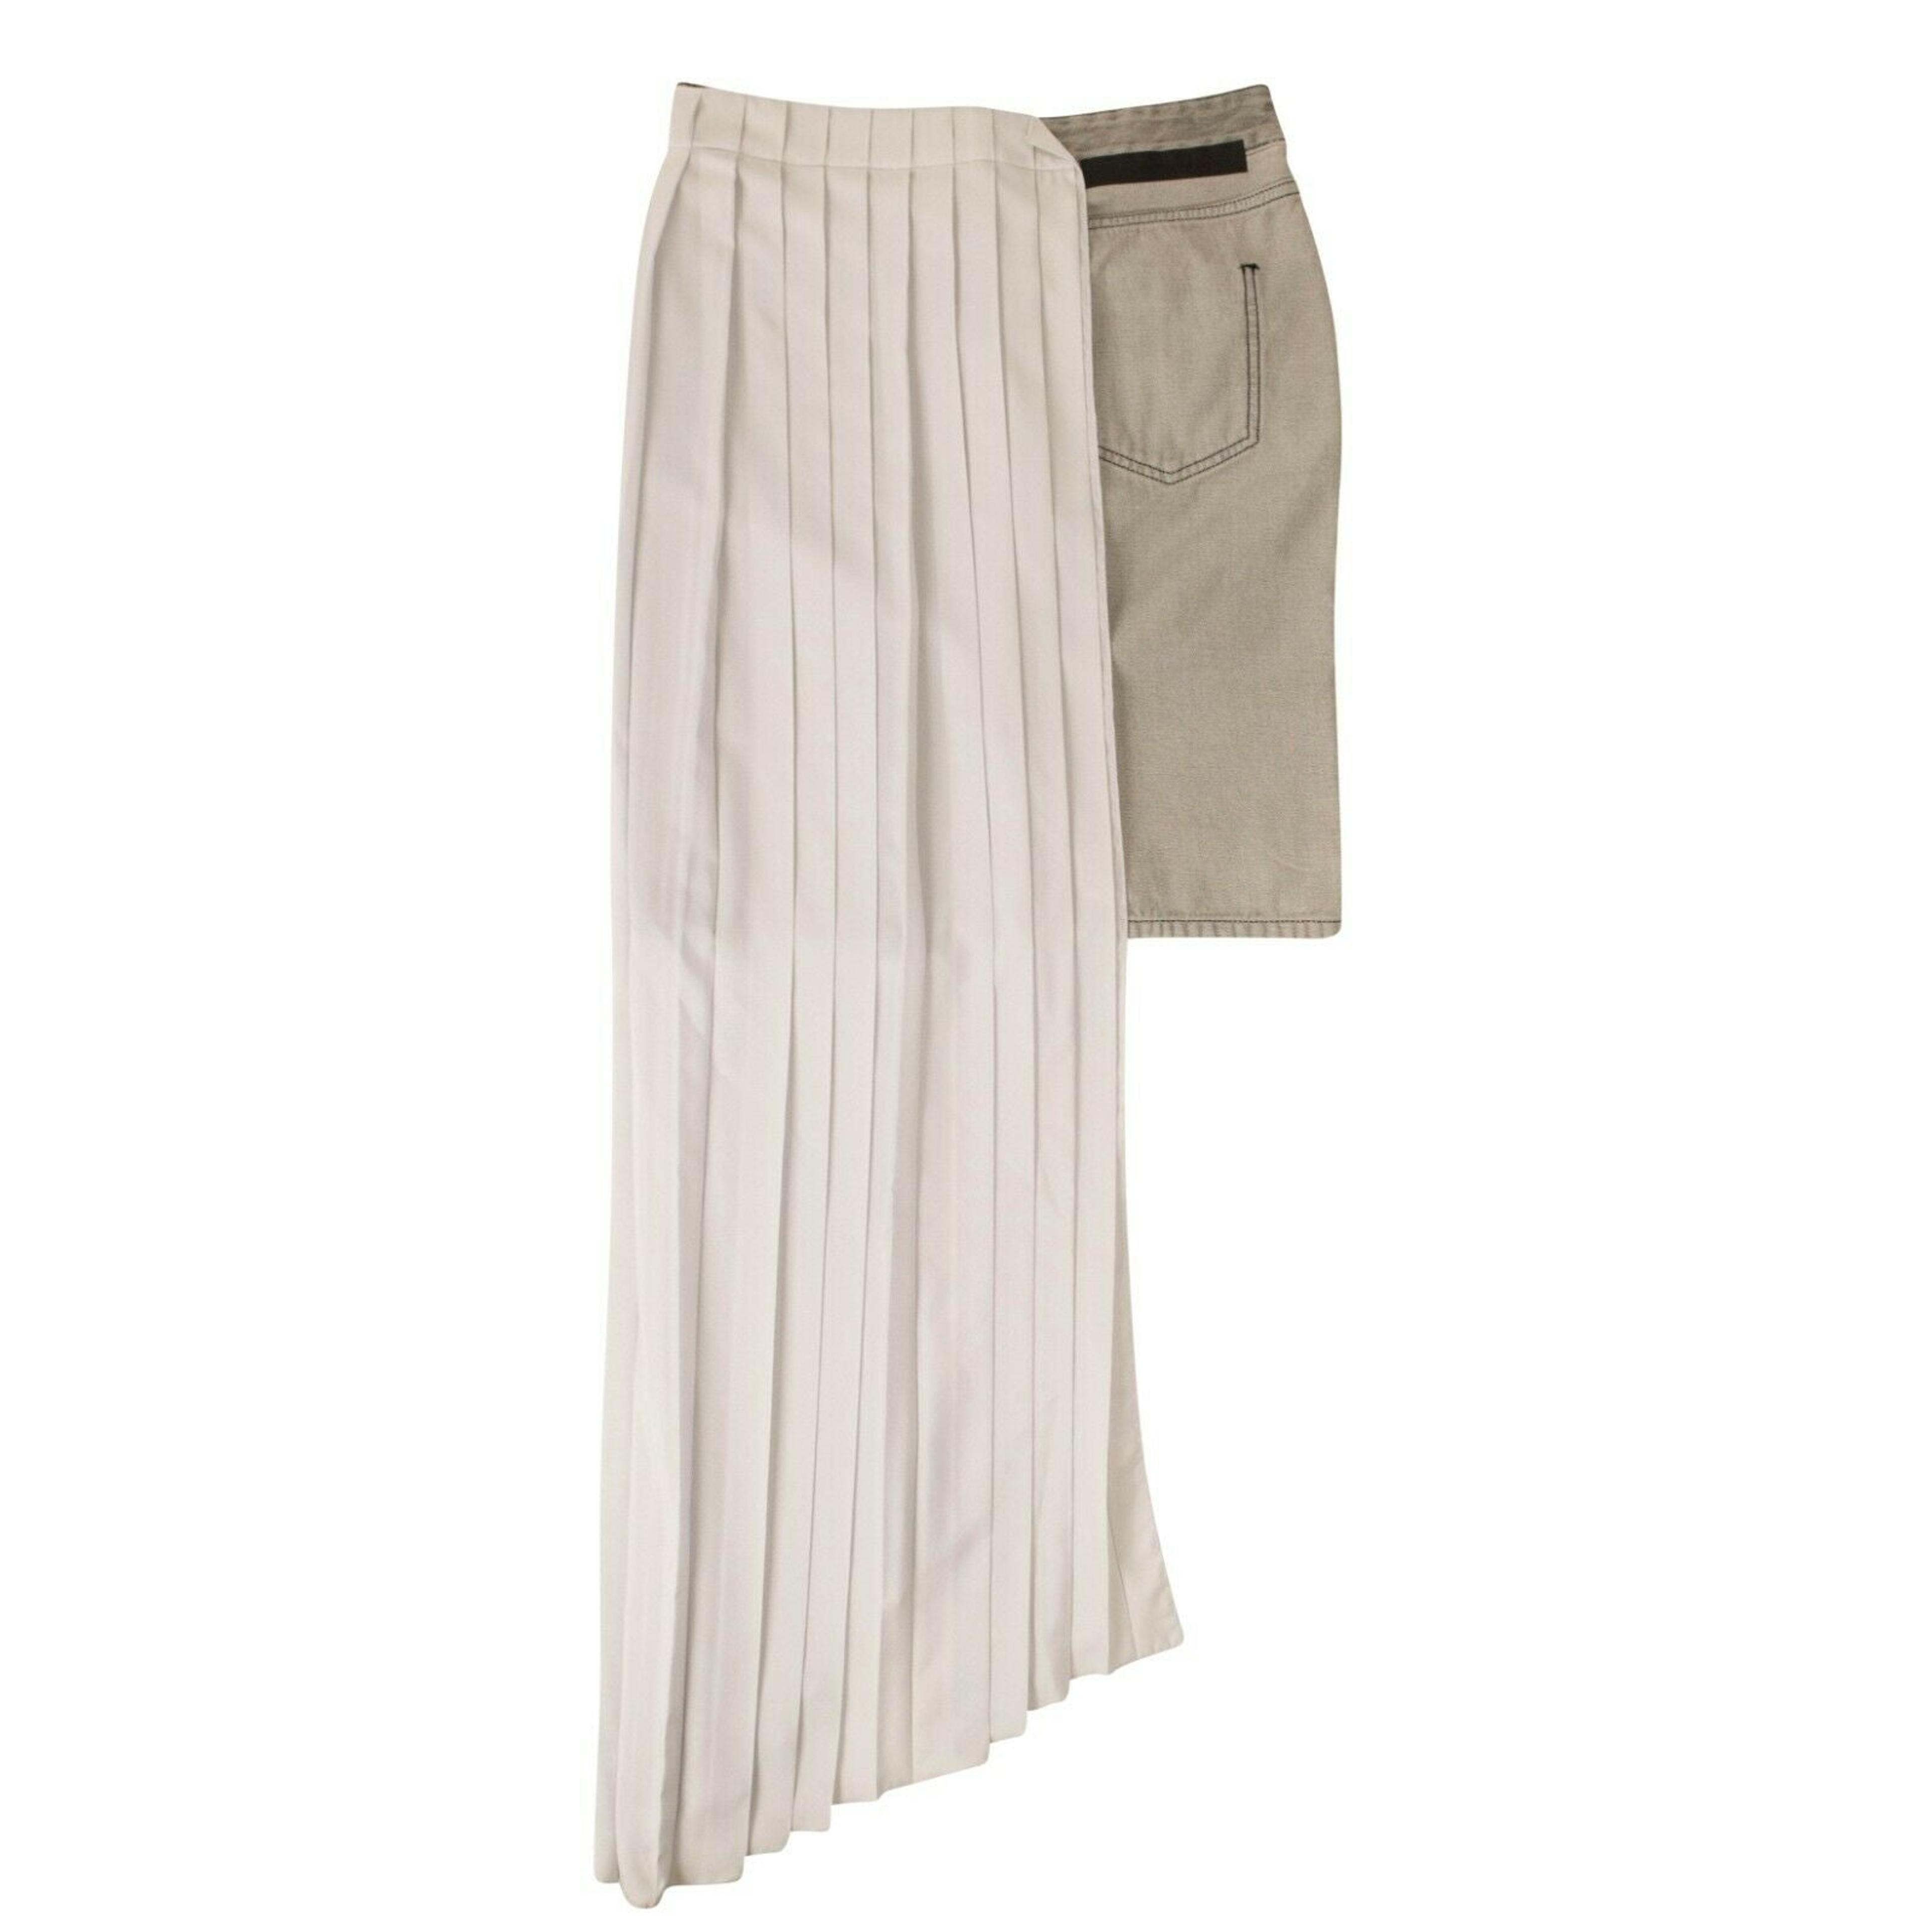 Alternate View 1 of Denim And White Asymmetric Panel Jean Skirt